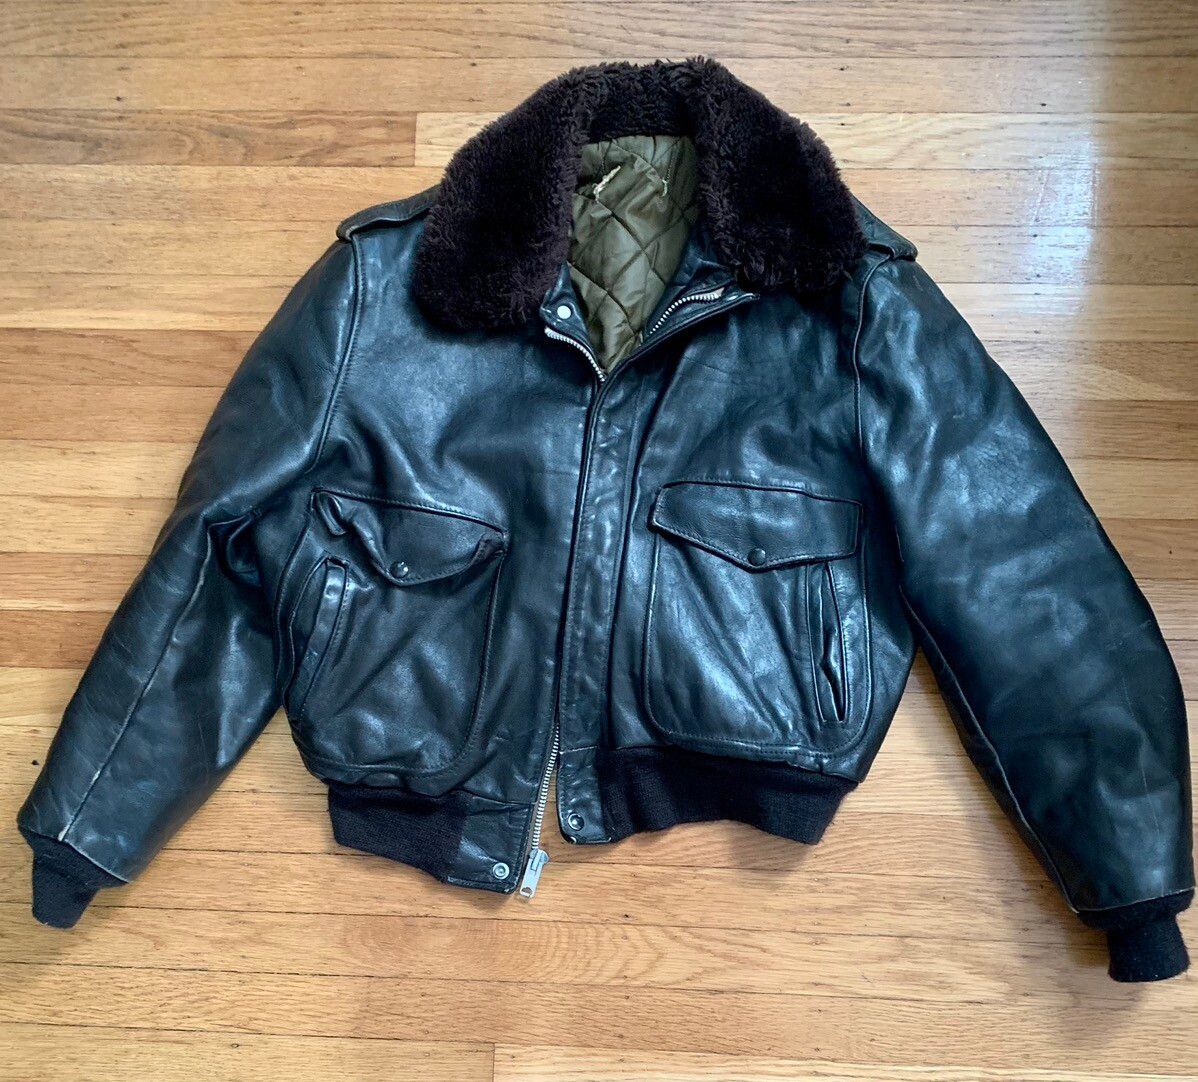 Vintage Vintage B1 leather flight jacket with faux fur collar | Grailed